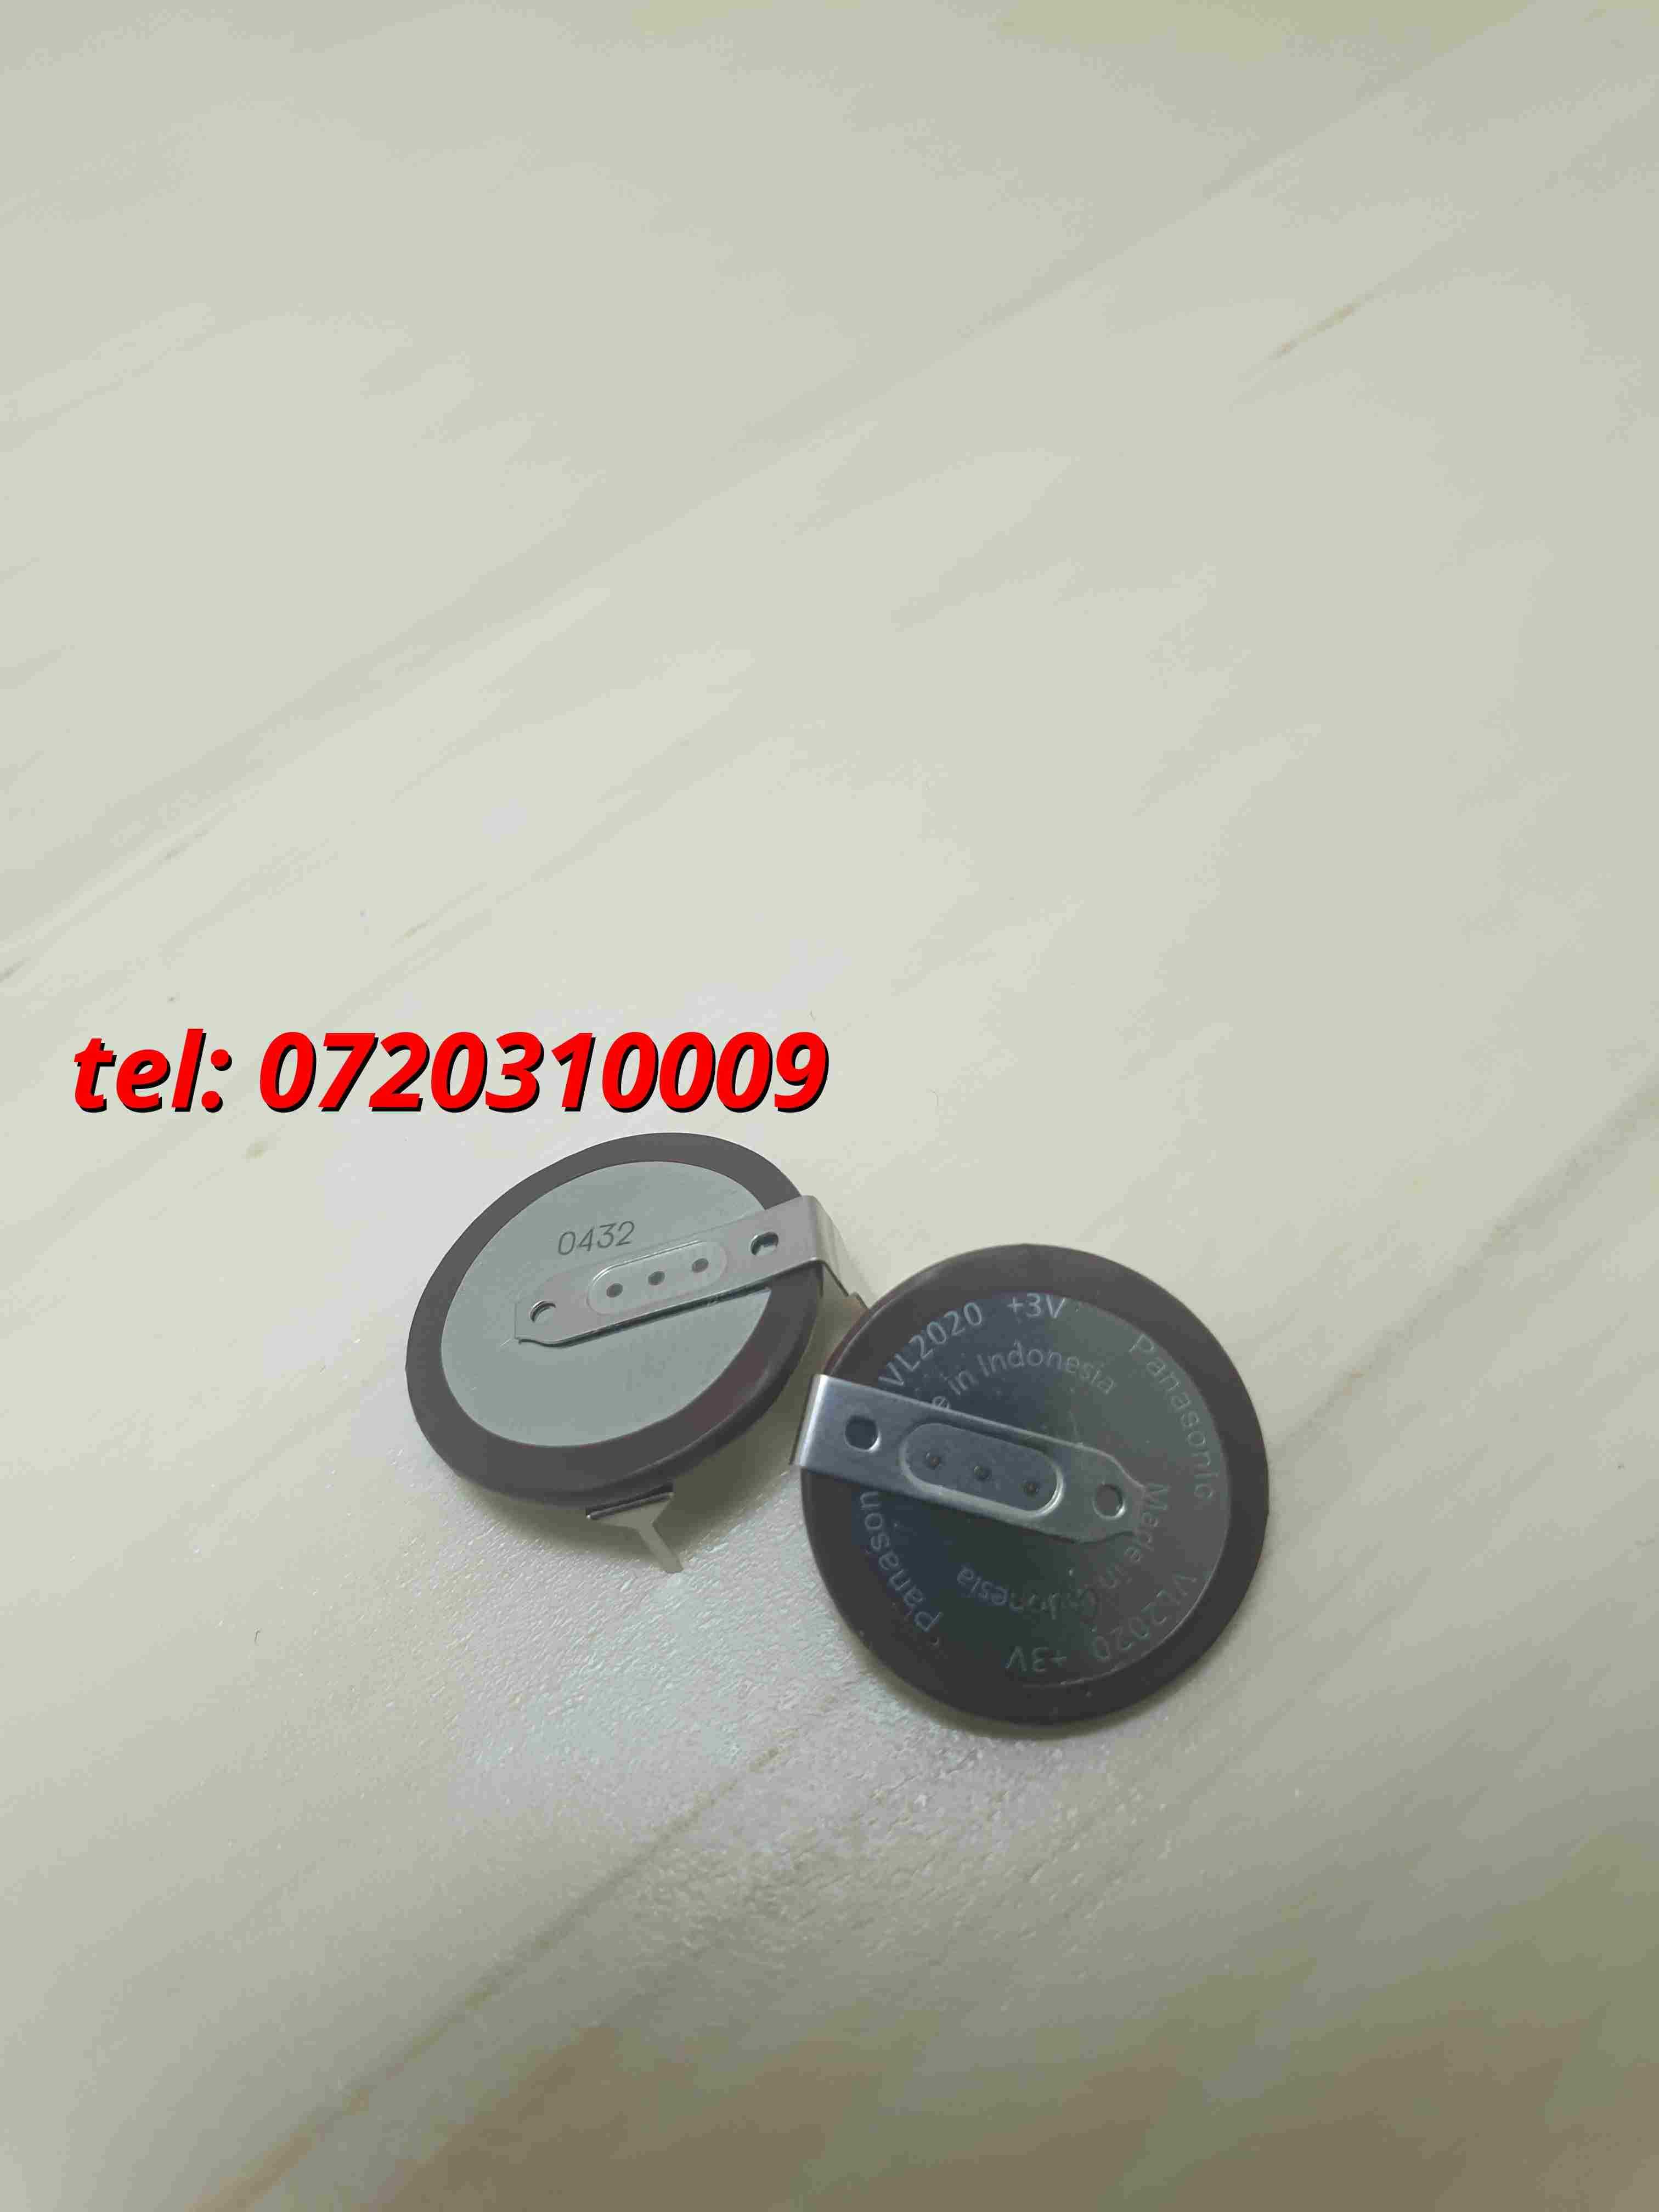 Acumulator Baterie Vl2020 Panasonic